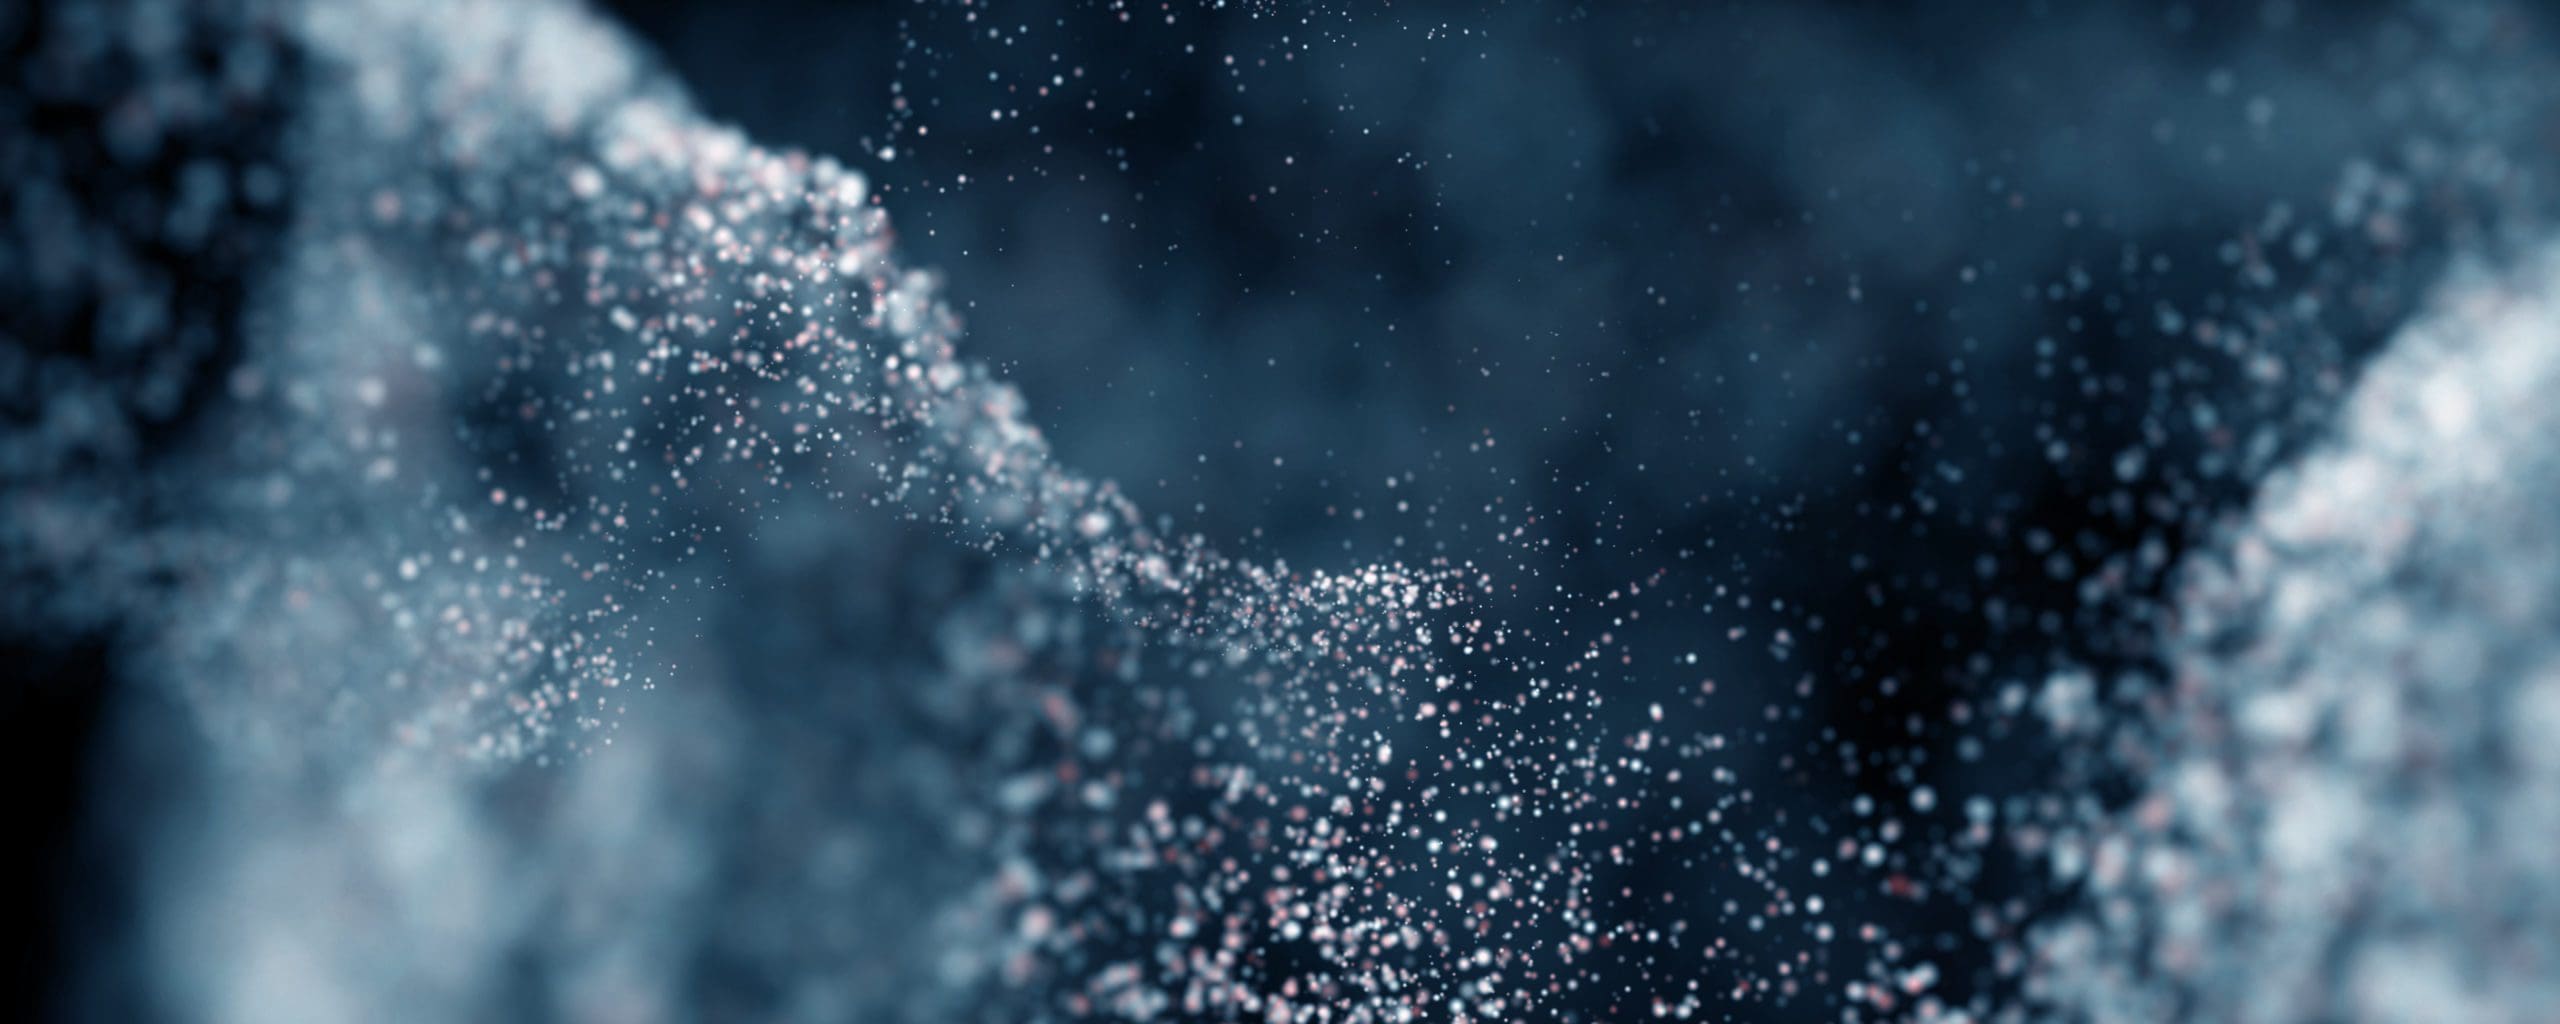 powdered metal flowing across blurred dark background